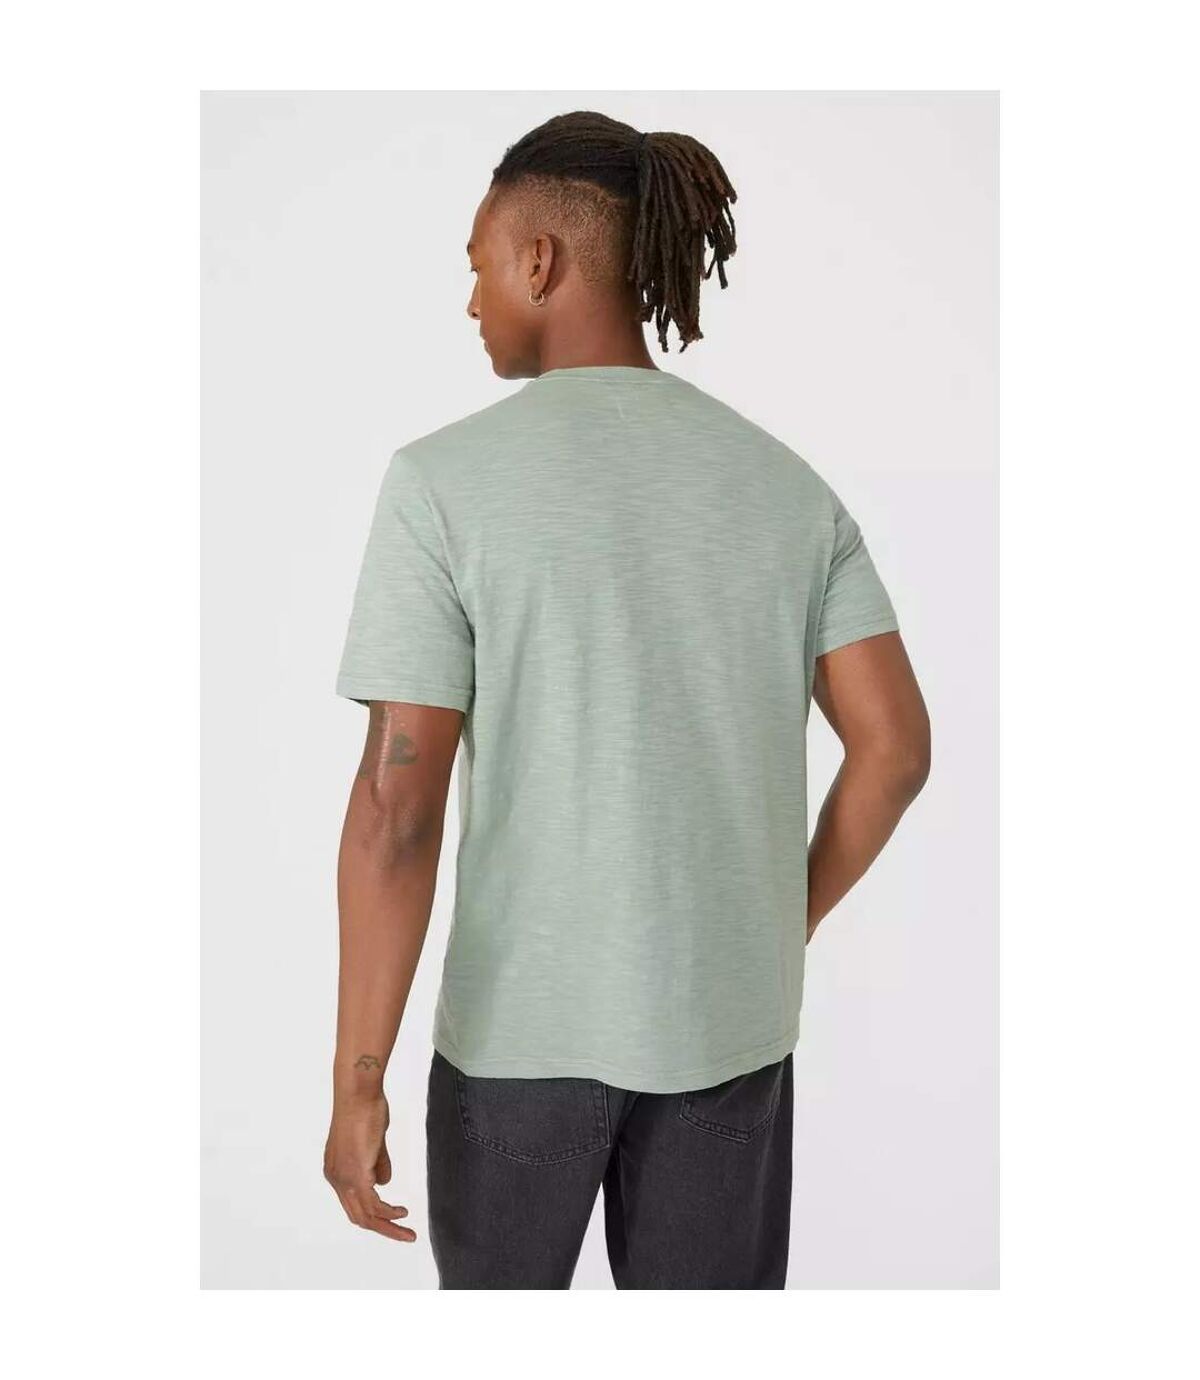 Mantaray - T-shirt - Homme (Vert clair) - UTDH329